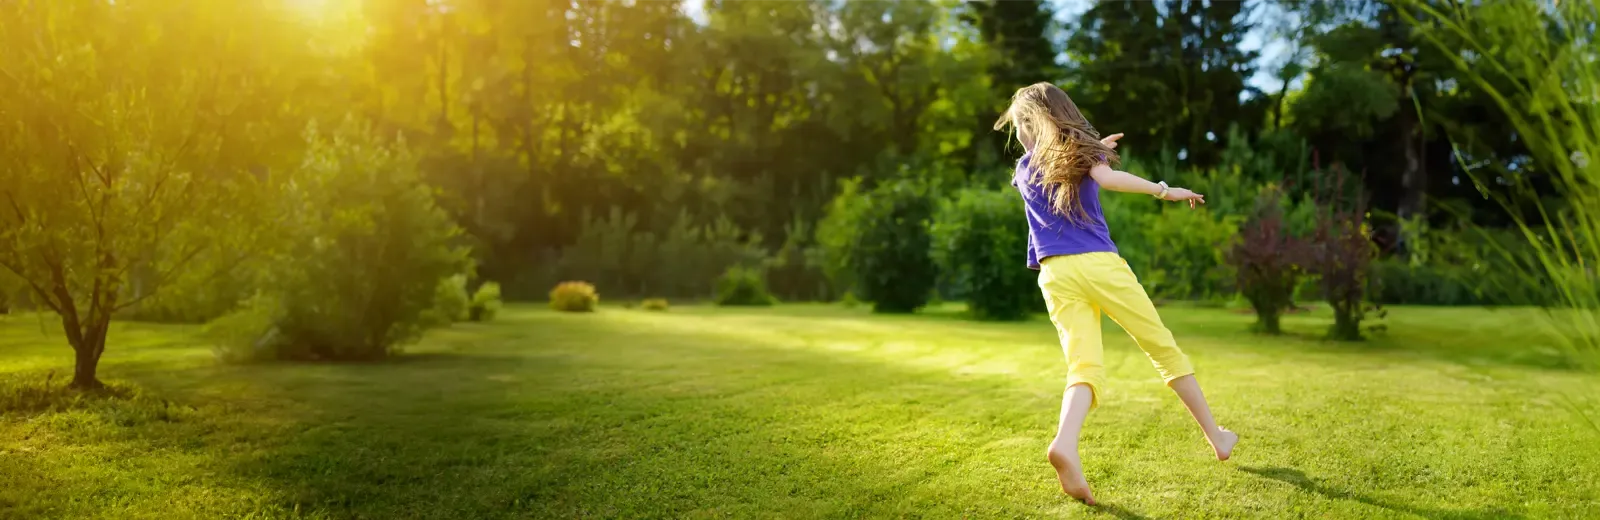 girl running on lawn